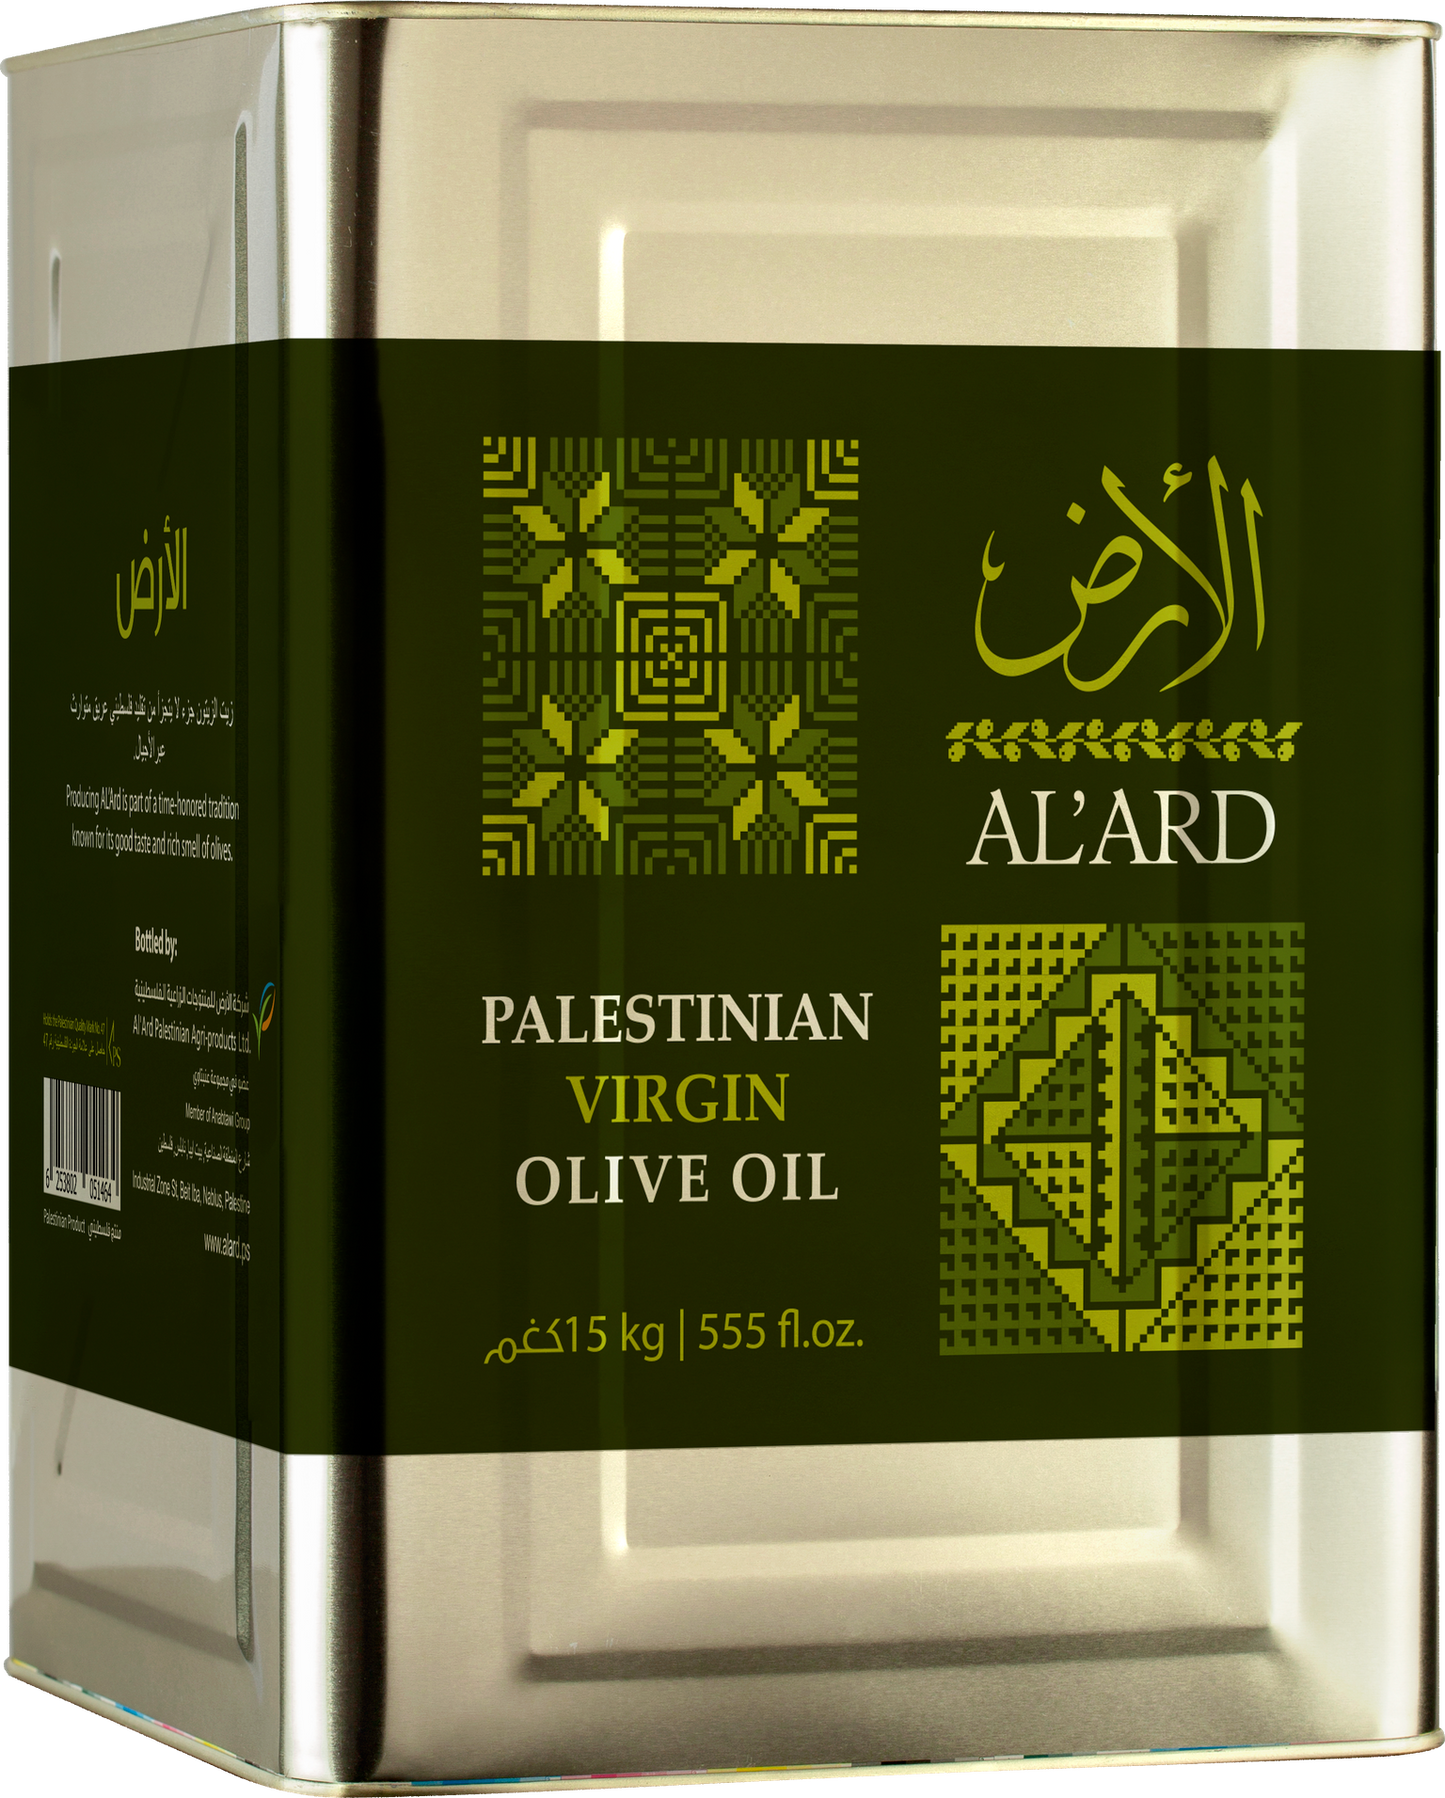 Palestinian virgin olive oil 15 kg